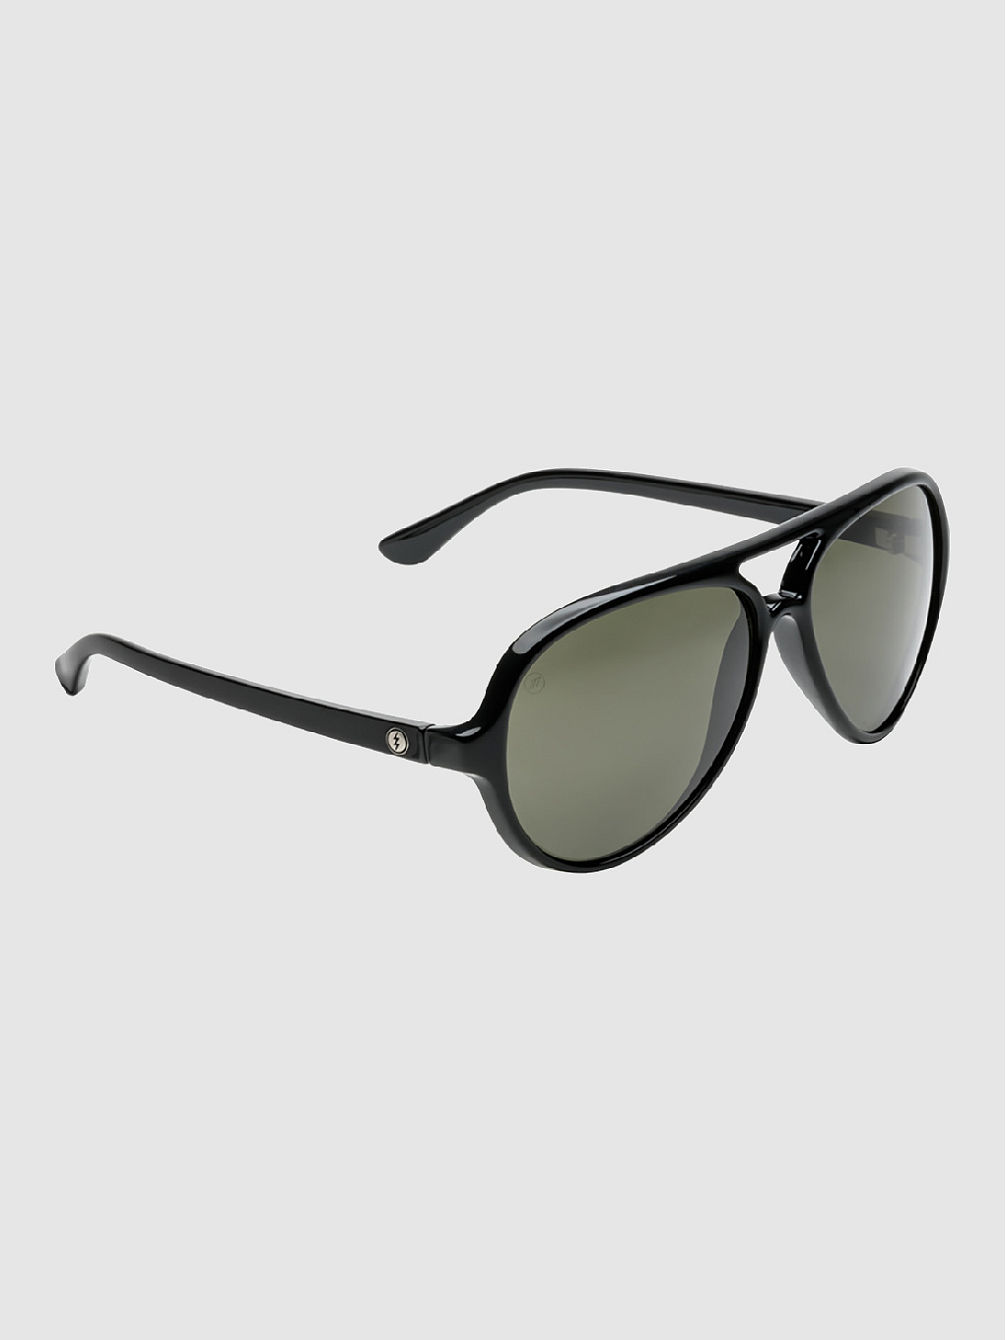 Elsinore Gloss Black Sunglasses